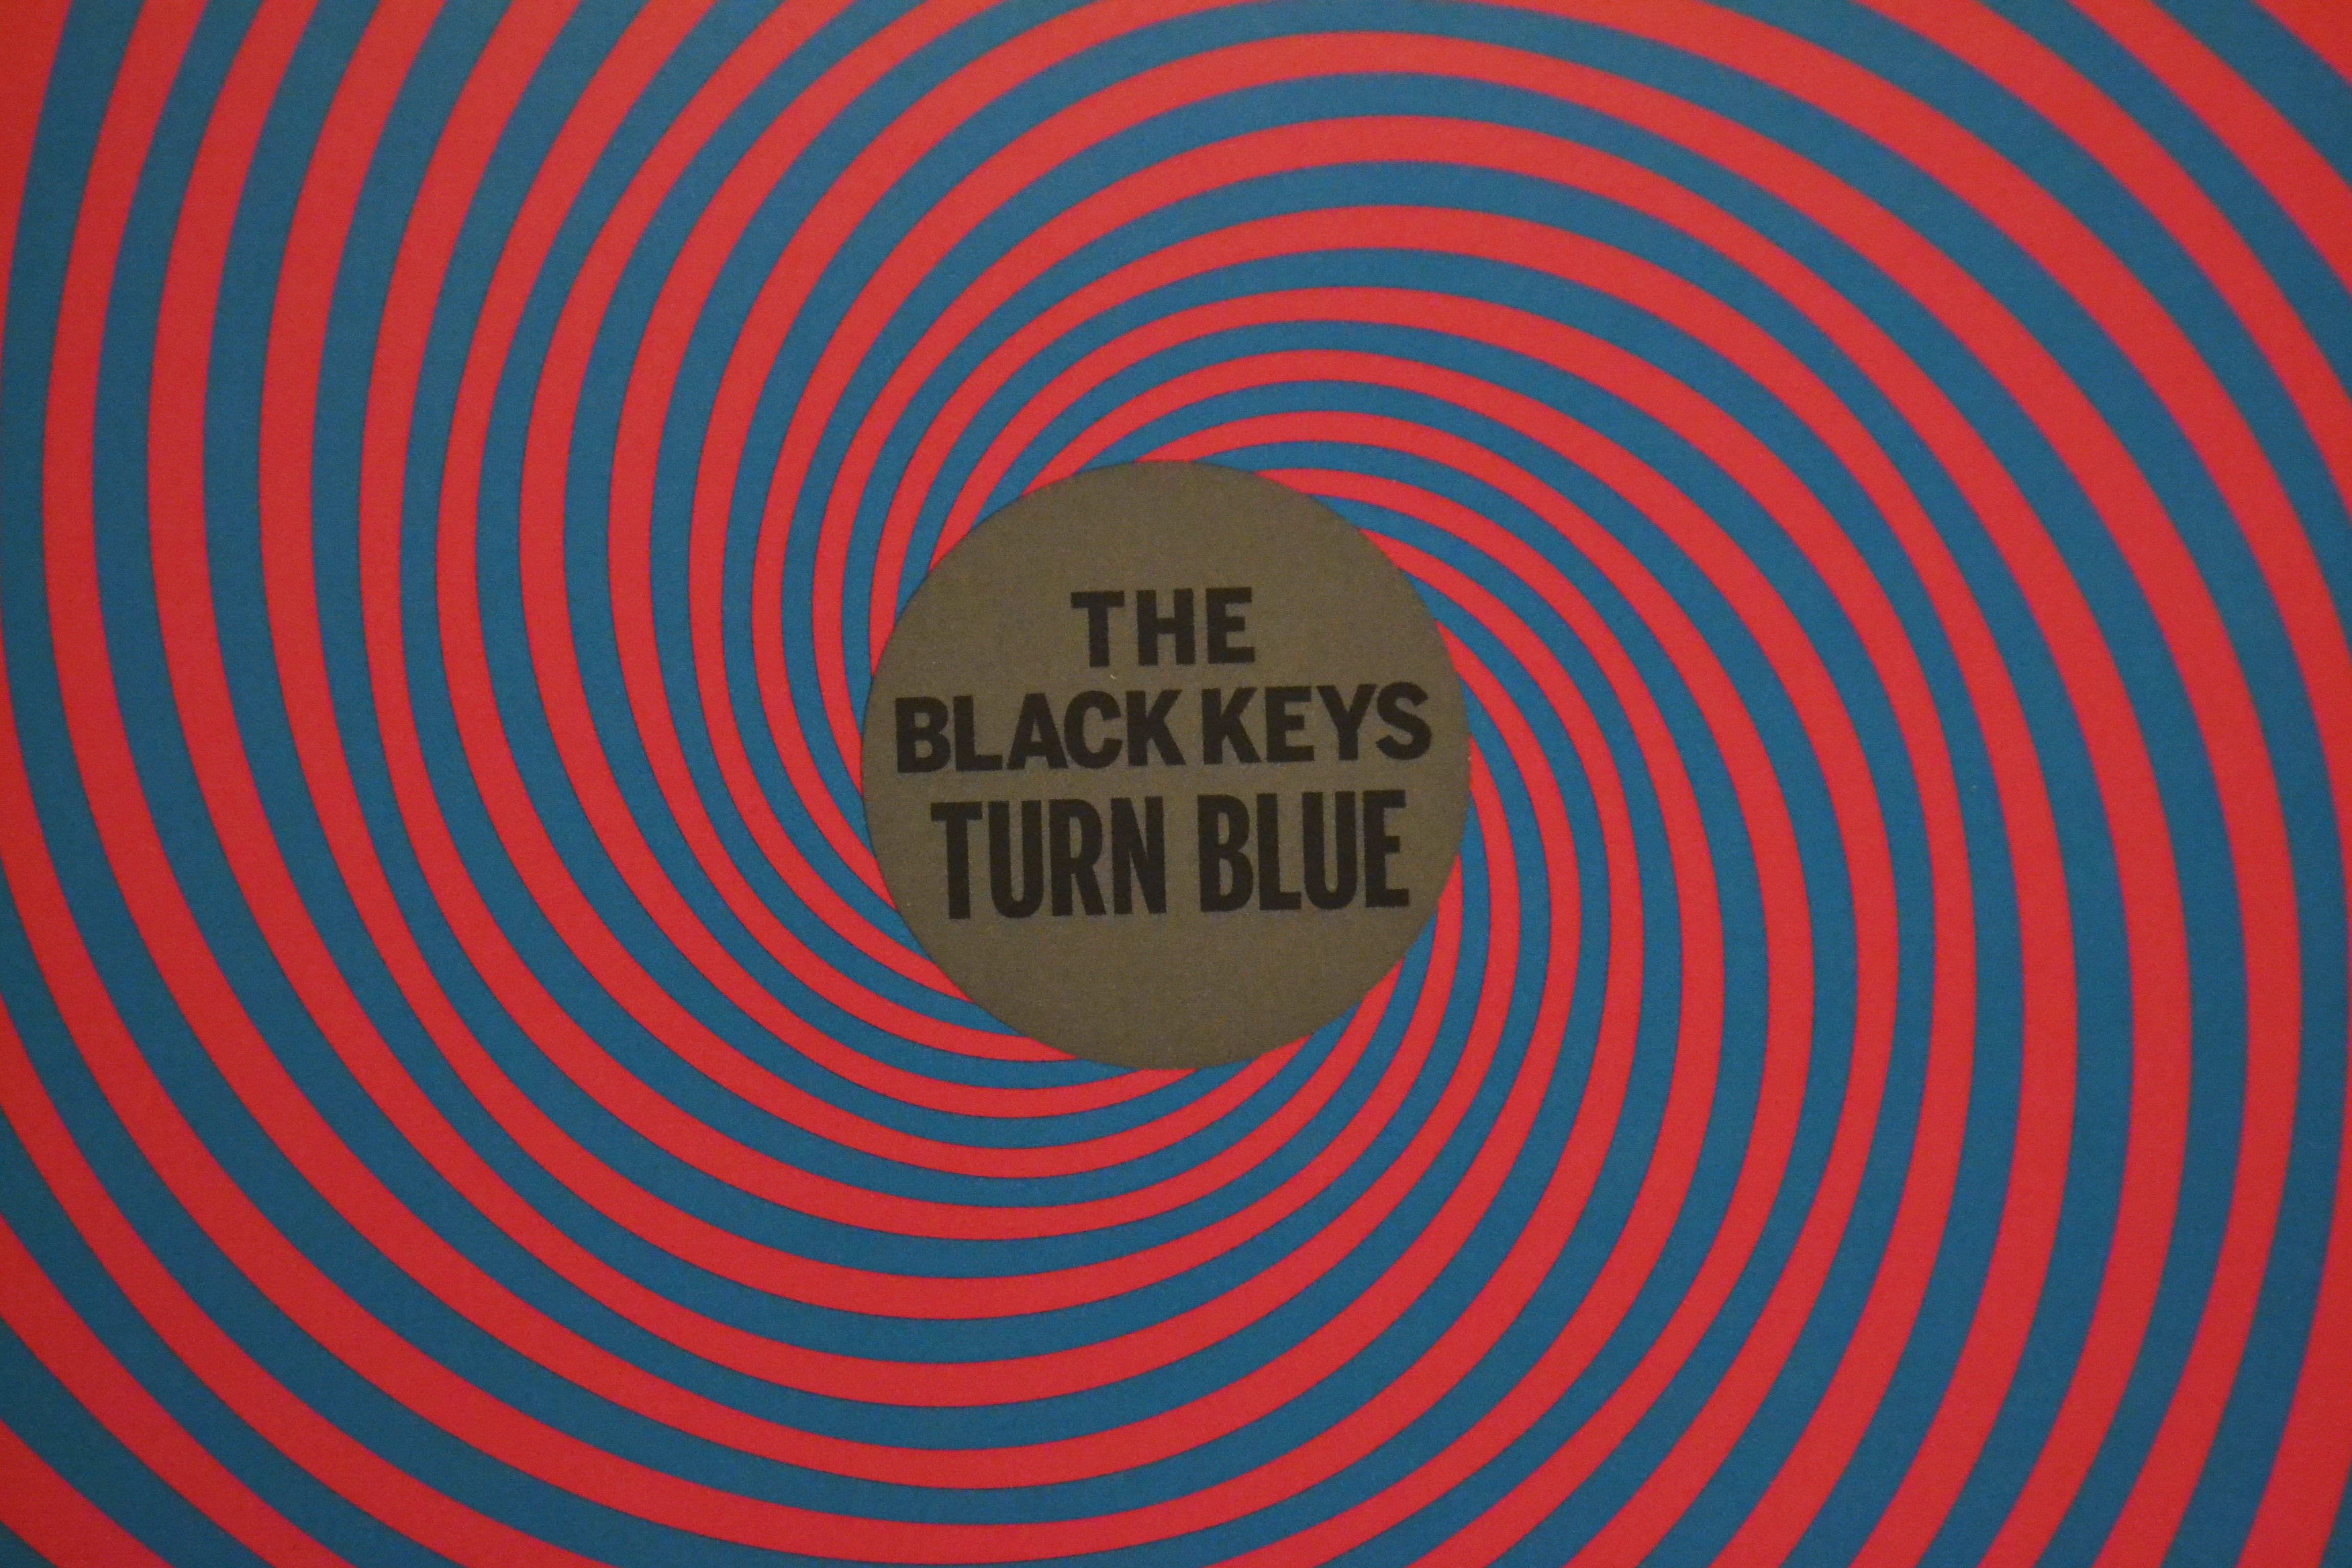 the black keys logo wallpaper